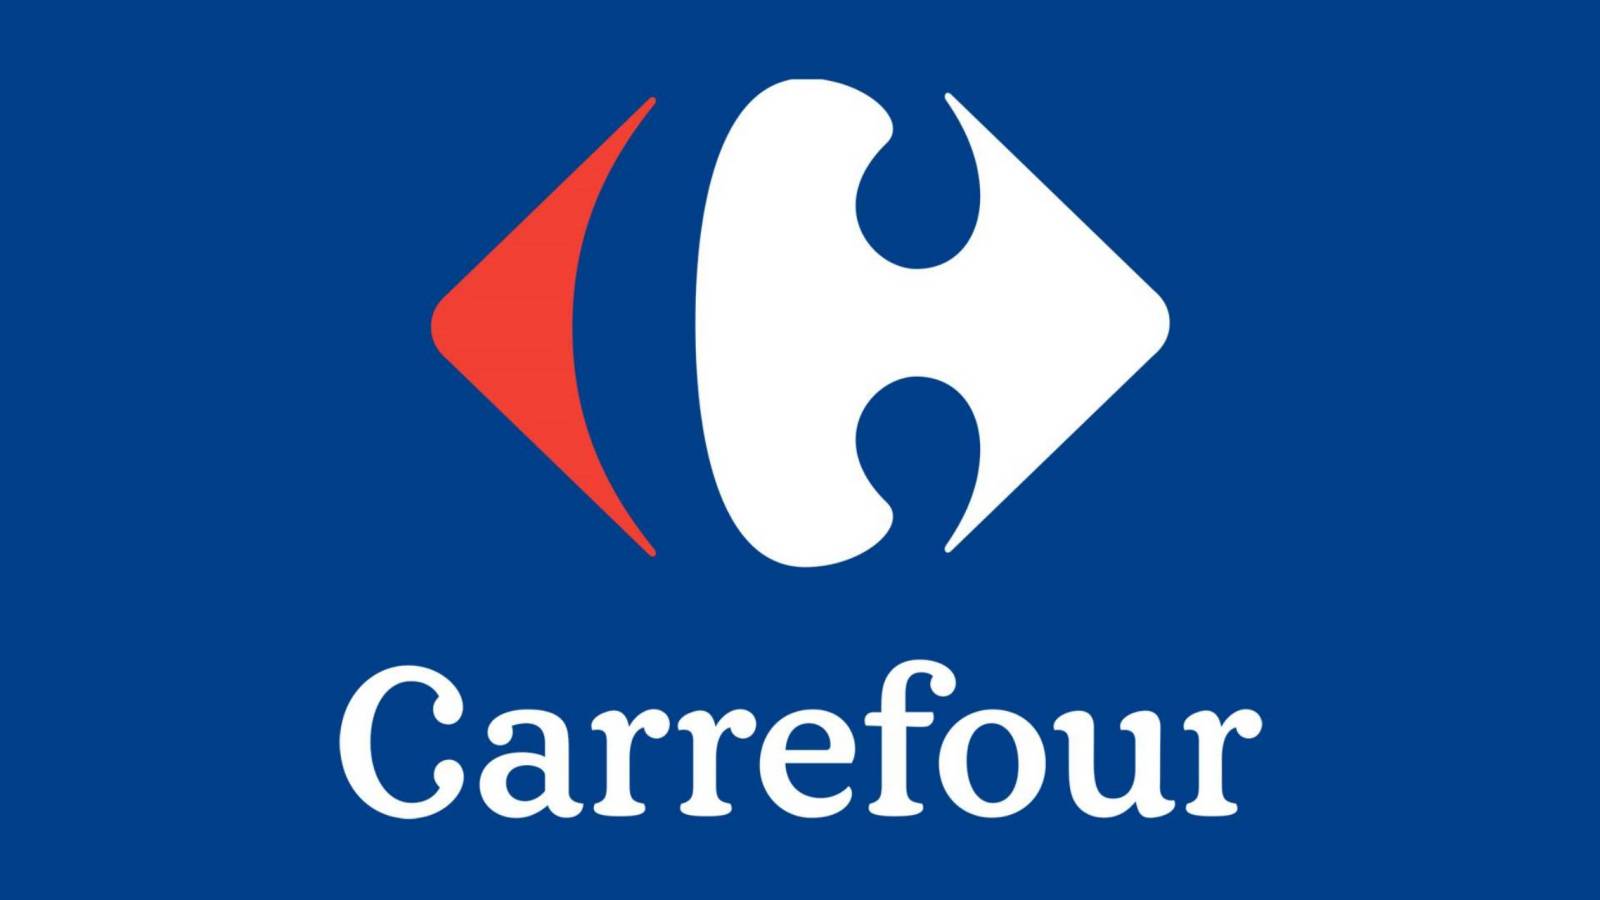 Carrefour carduri